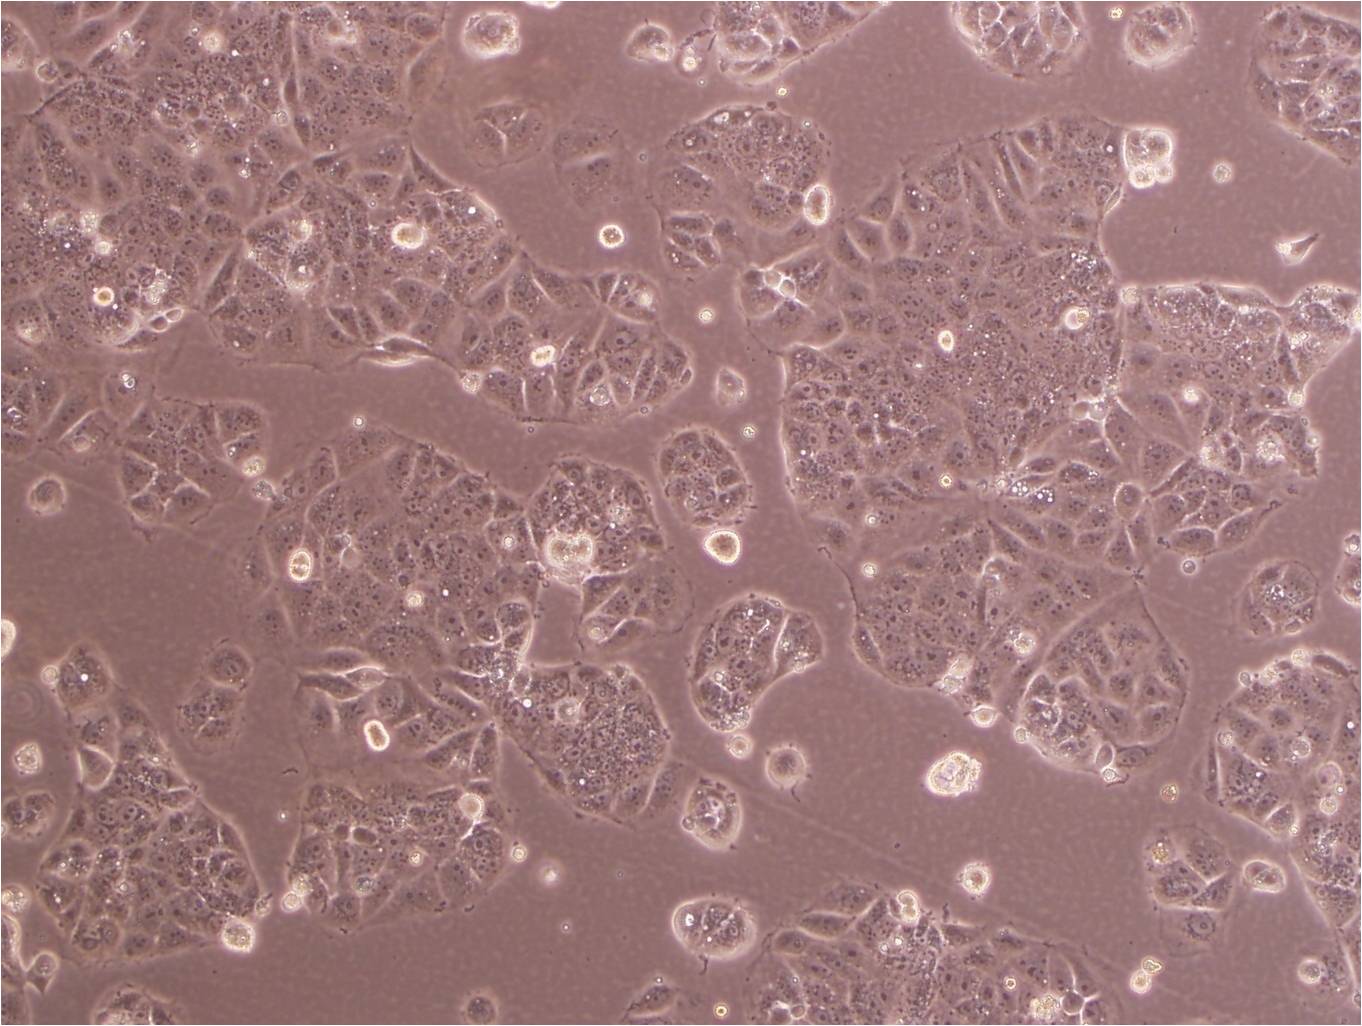 Psi2 DAP fibroblast cells小鼠胚胎成纤维细胞系,Psi2 DAP fibroblast cells